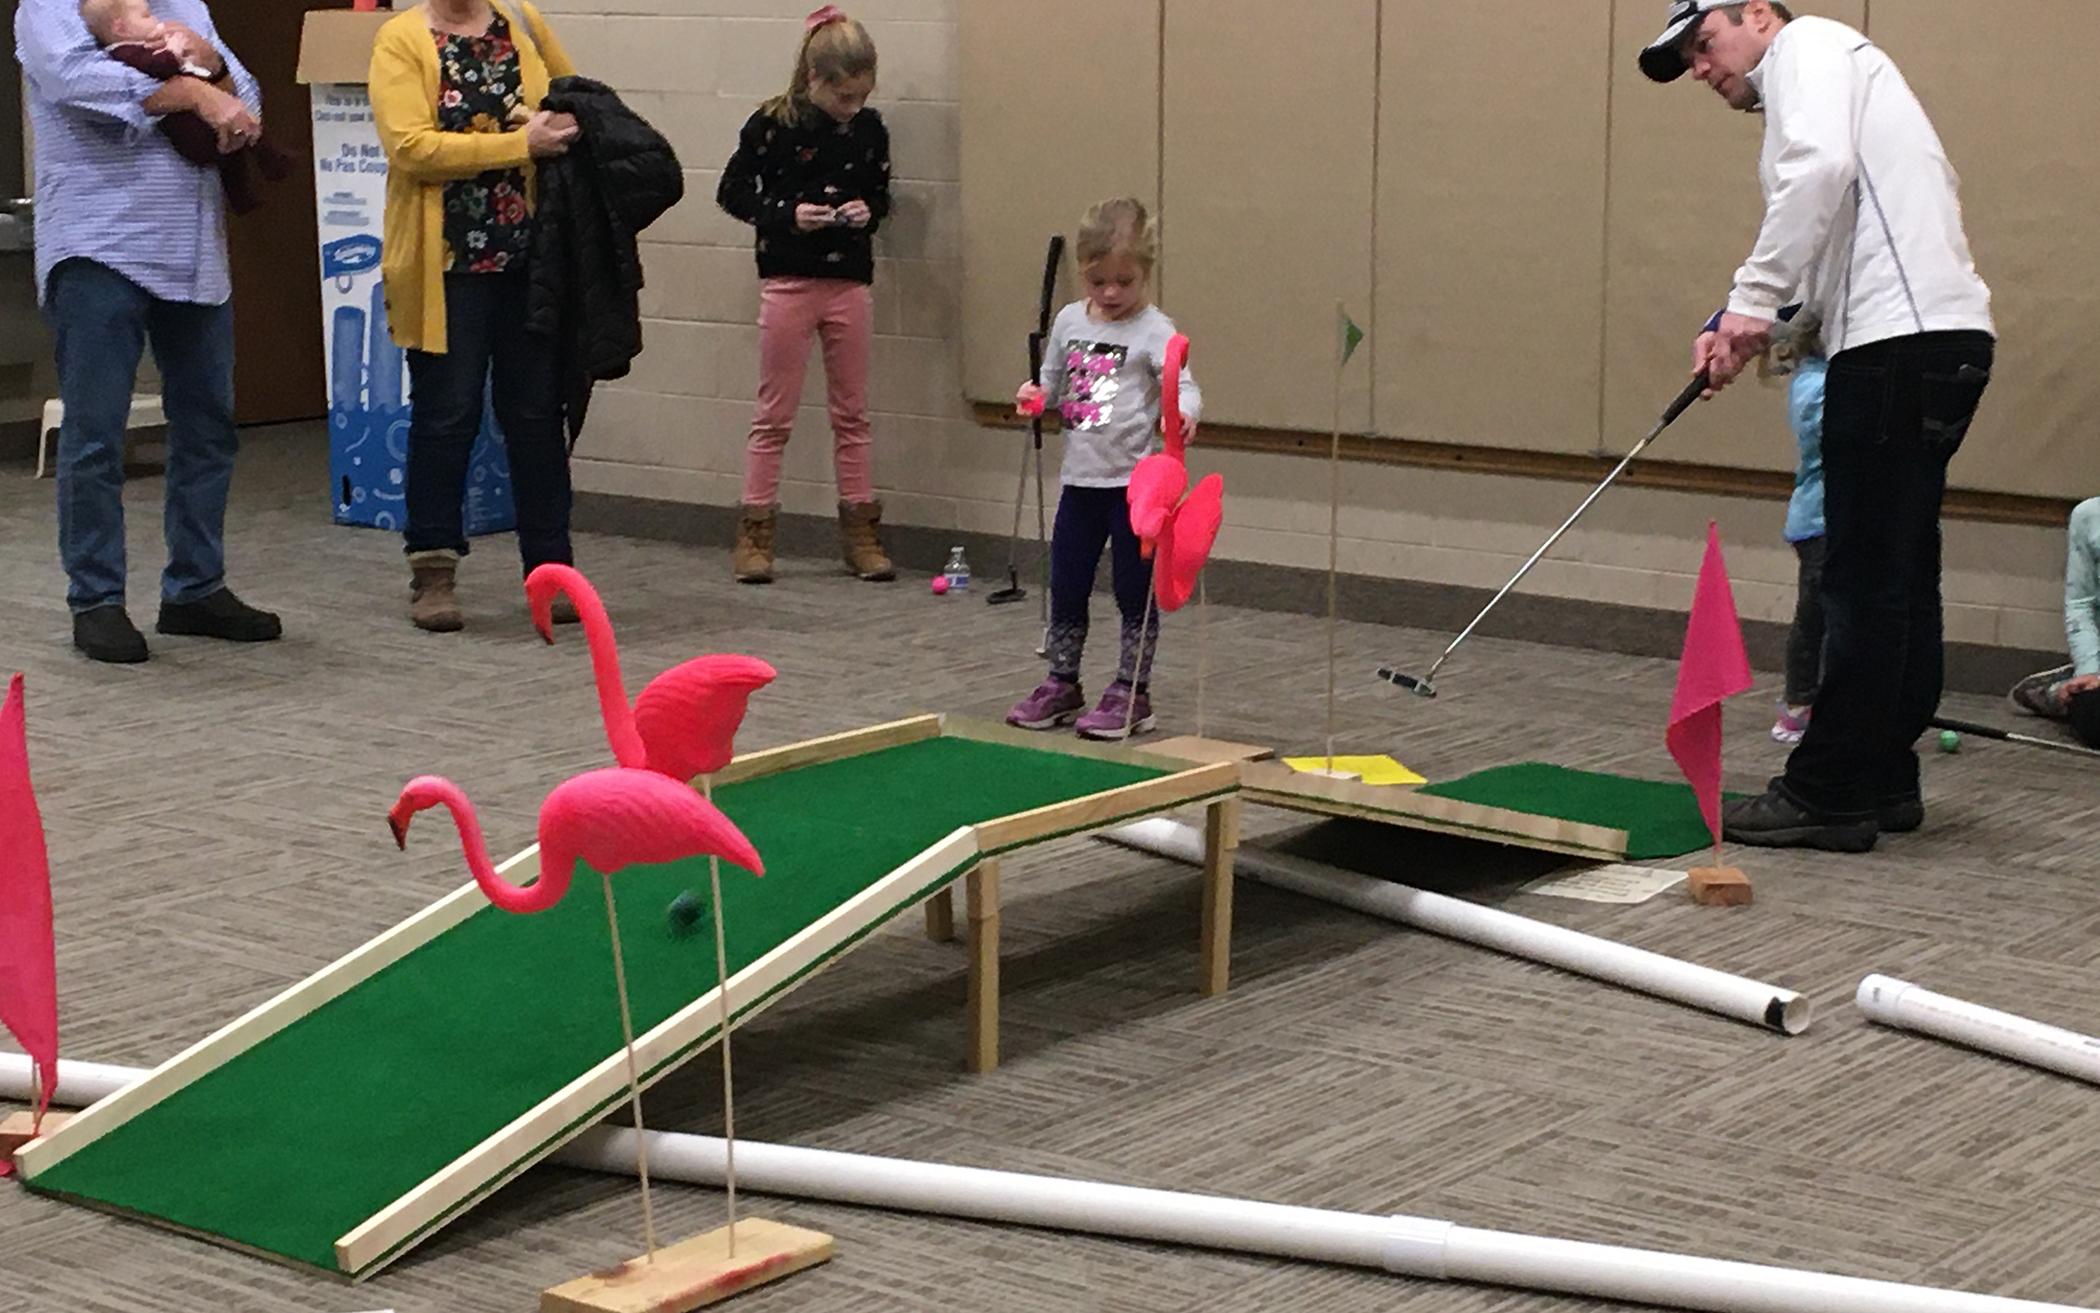 Michigan Church Converts Building Into Miniature Golf Course for Winter Fun Outreach Event